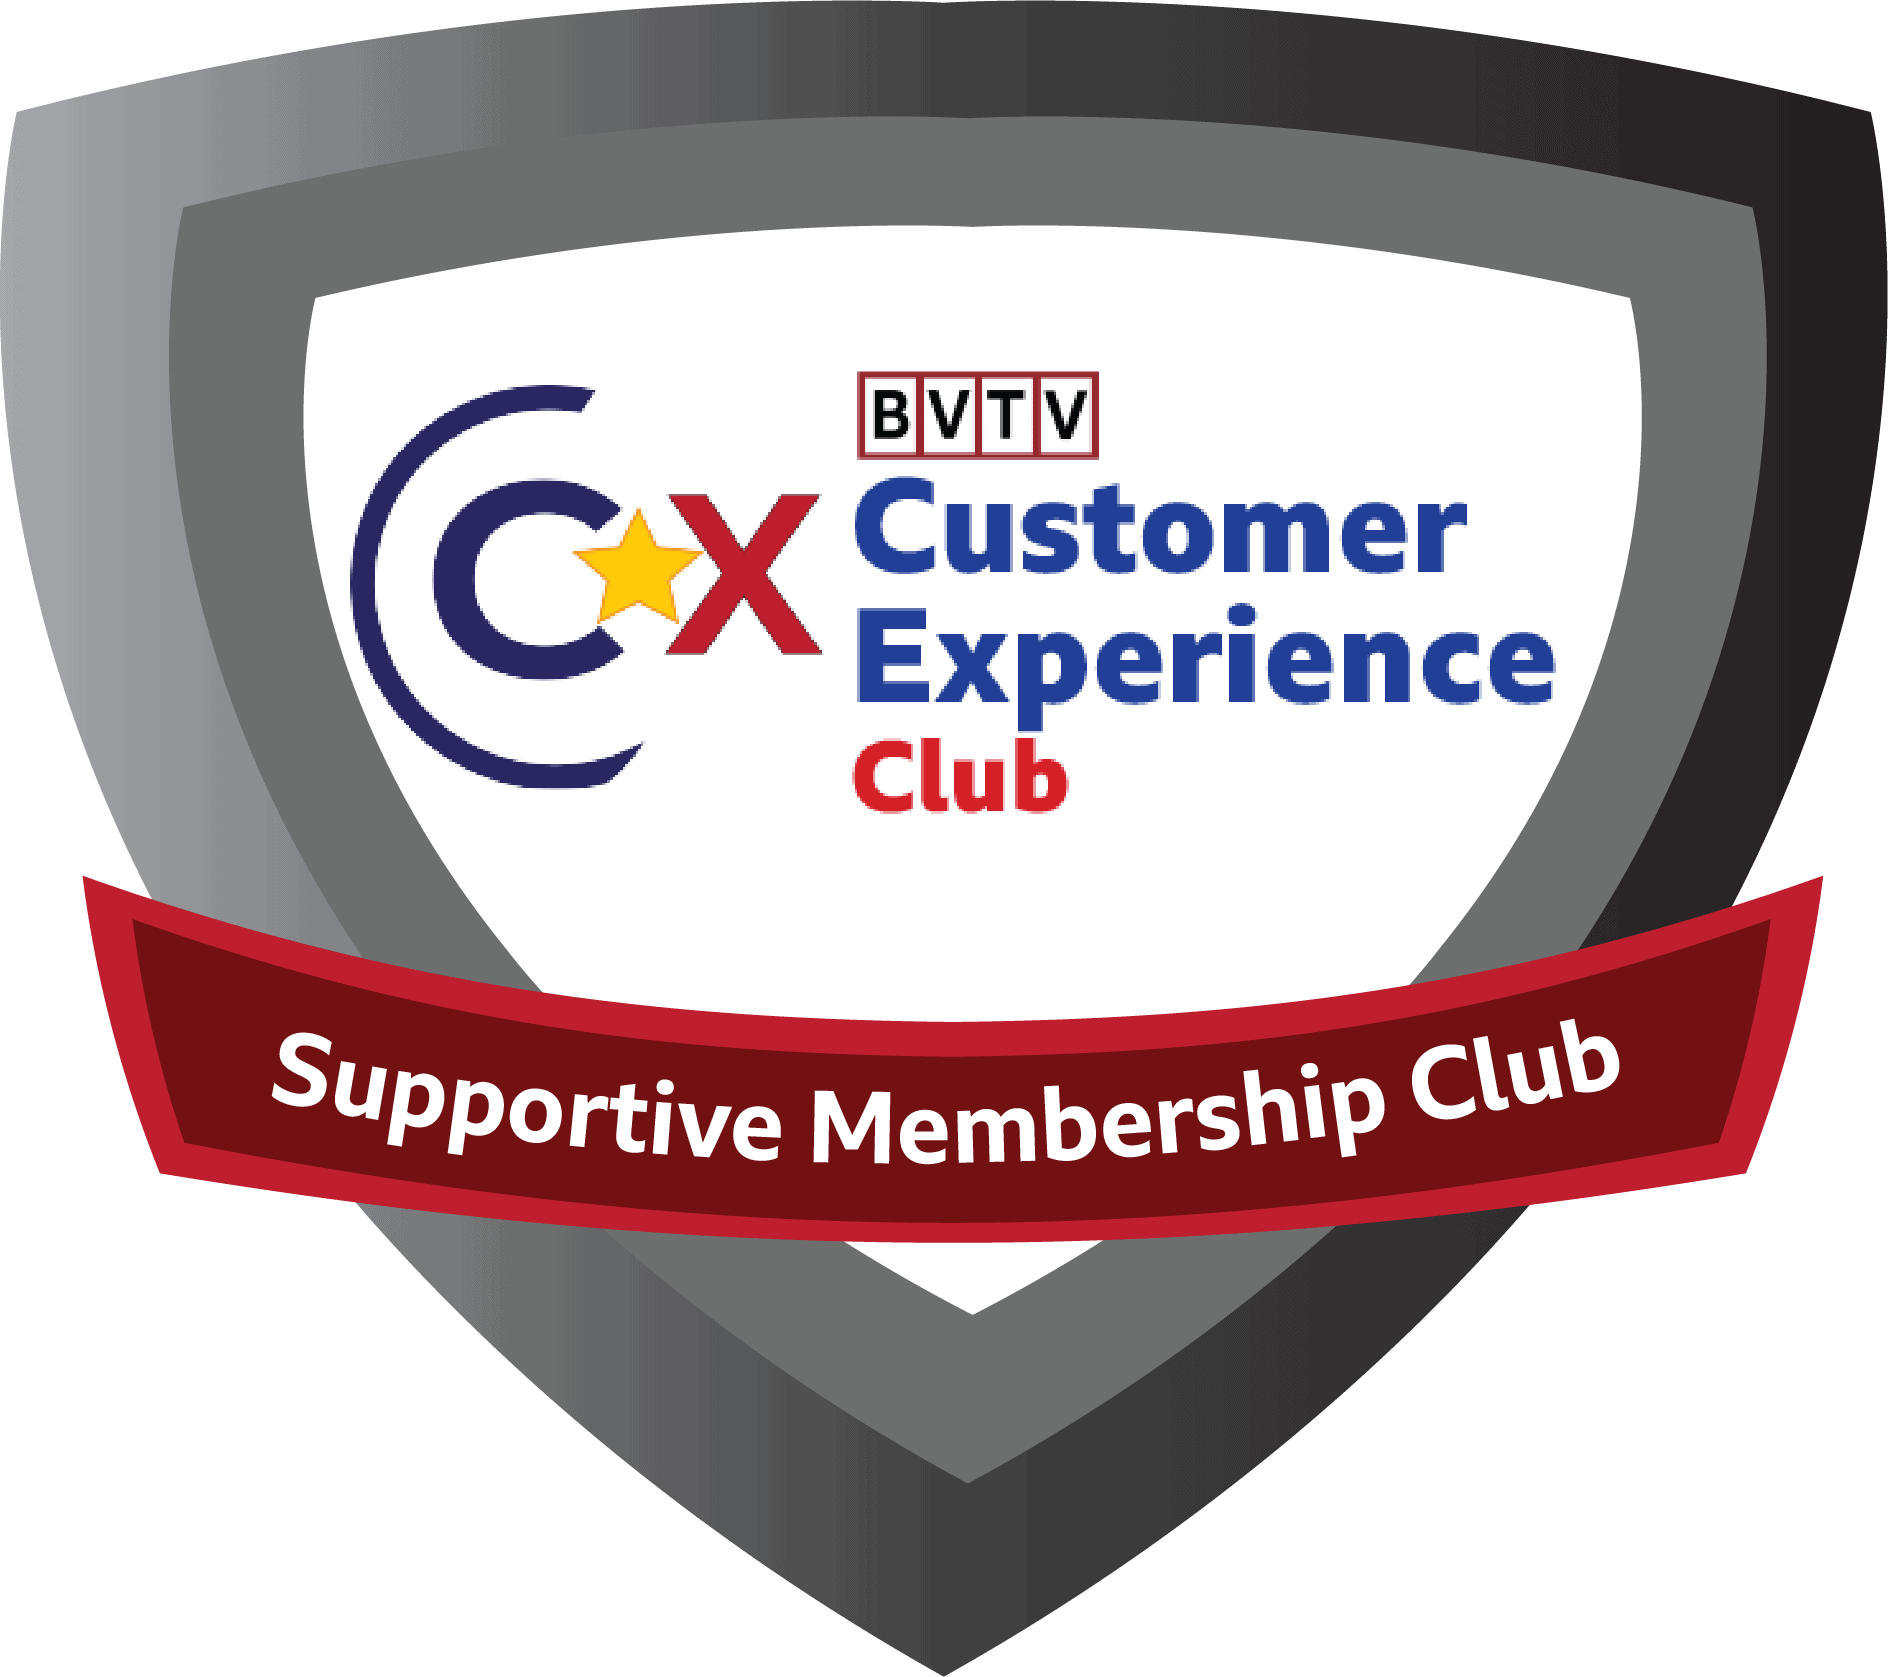 BVTV Customer Experience Club at www.bizvision.co.uk